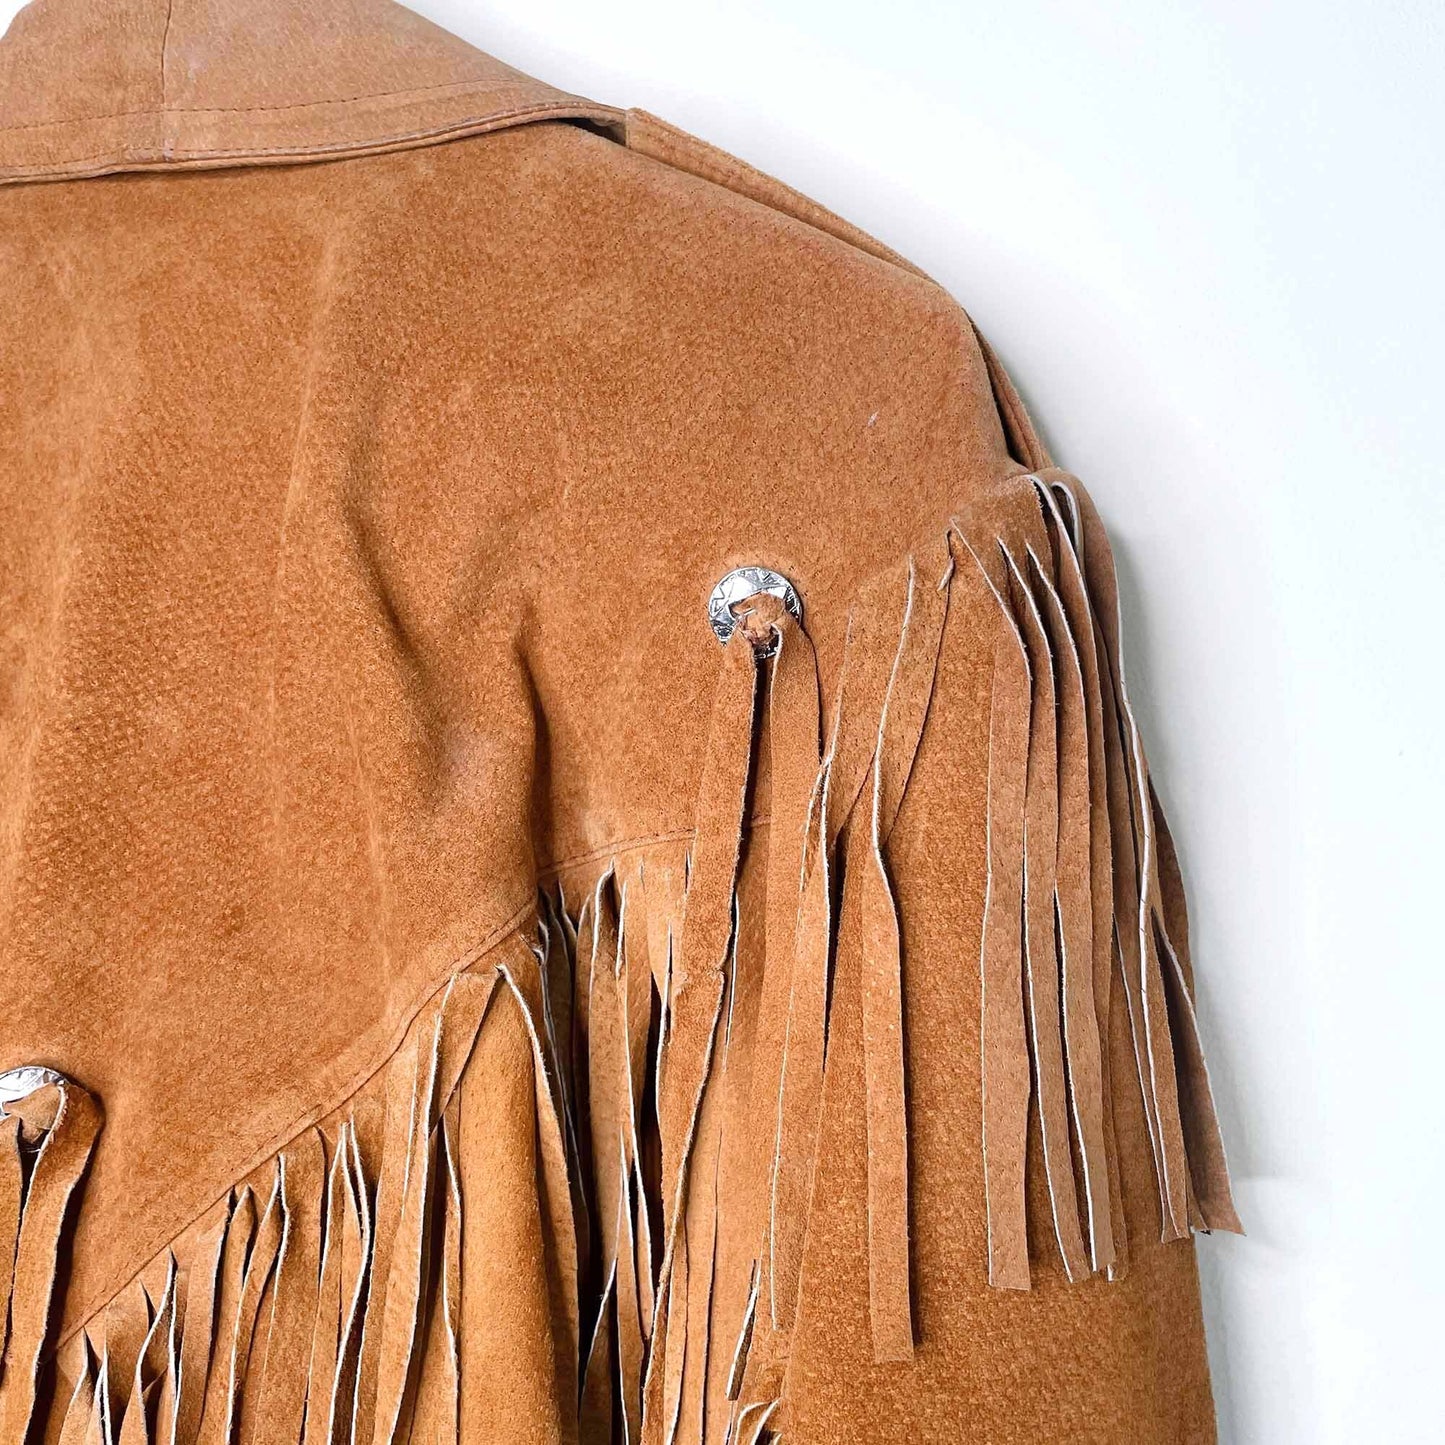 Vintage western suede tassel biker jacket - size Medium